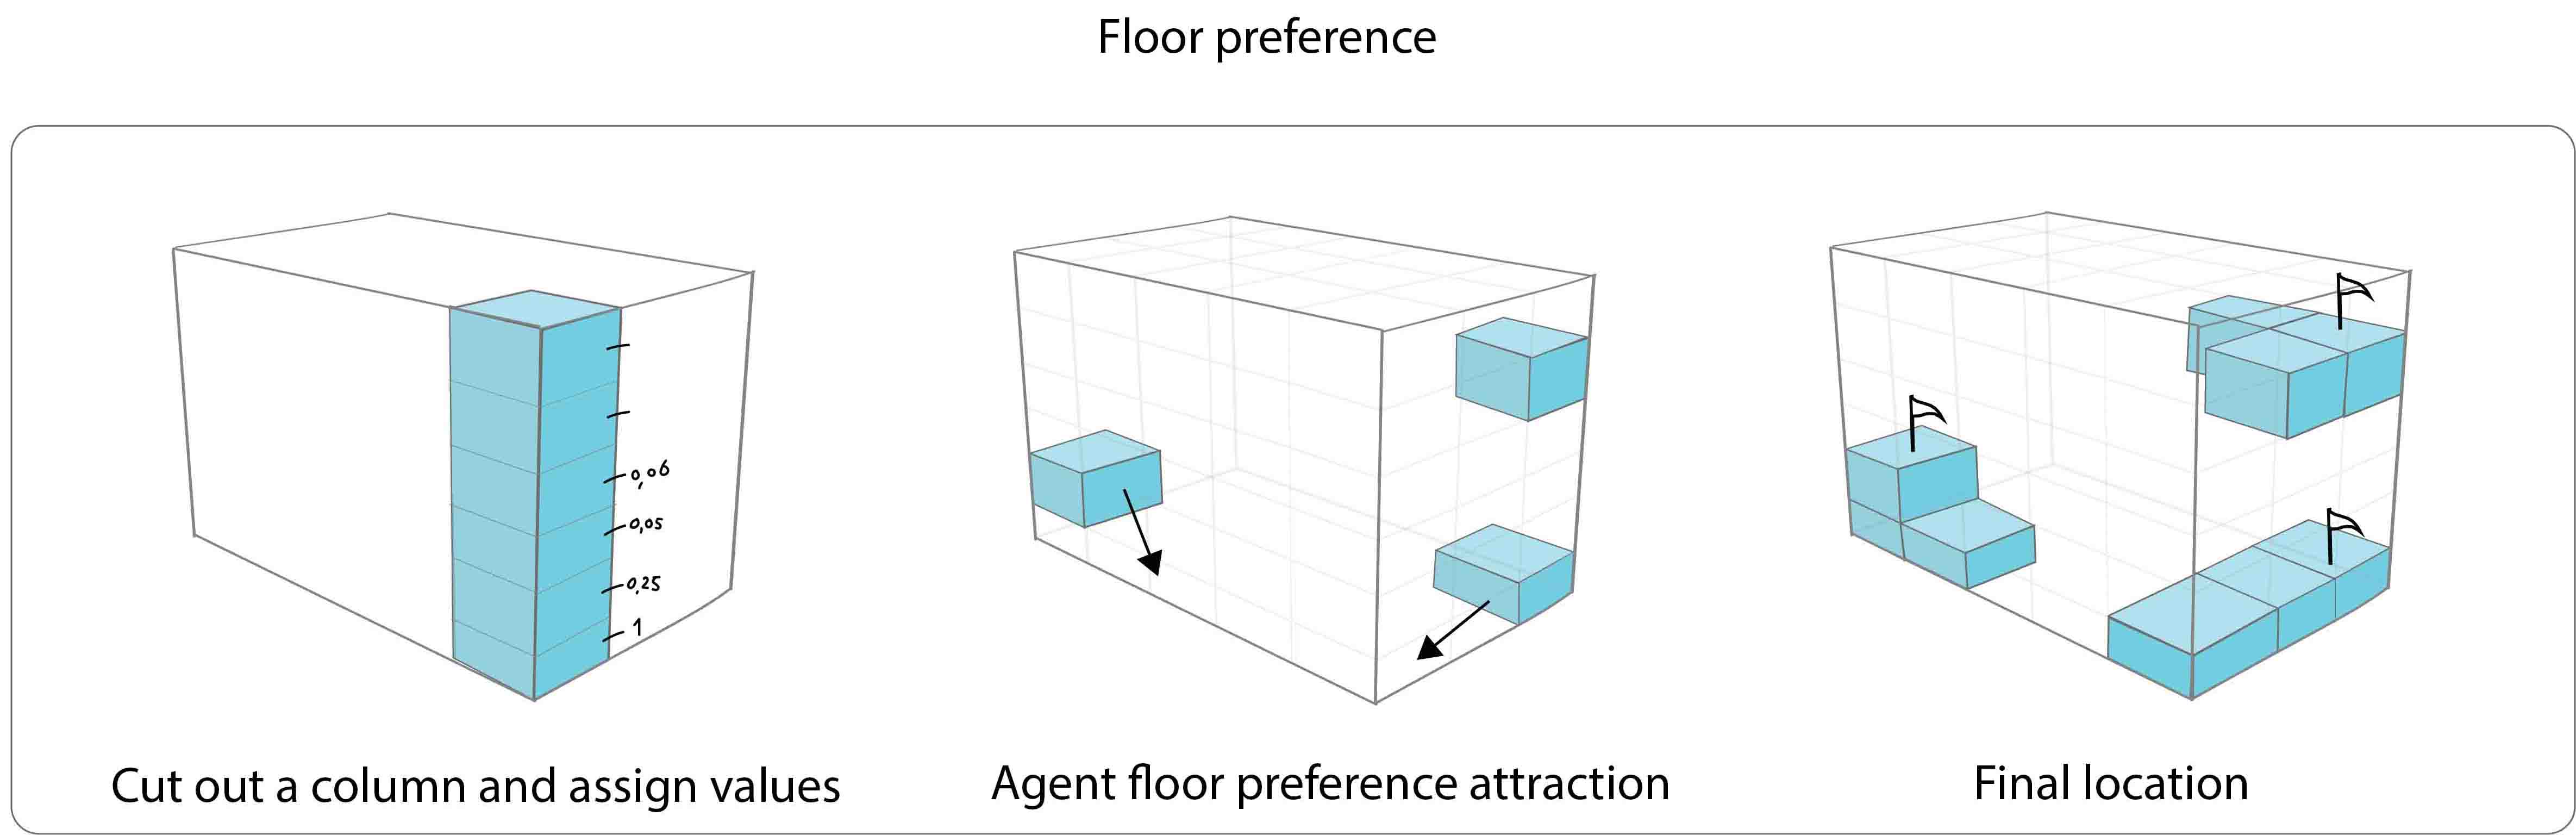 Floor preference